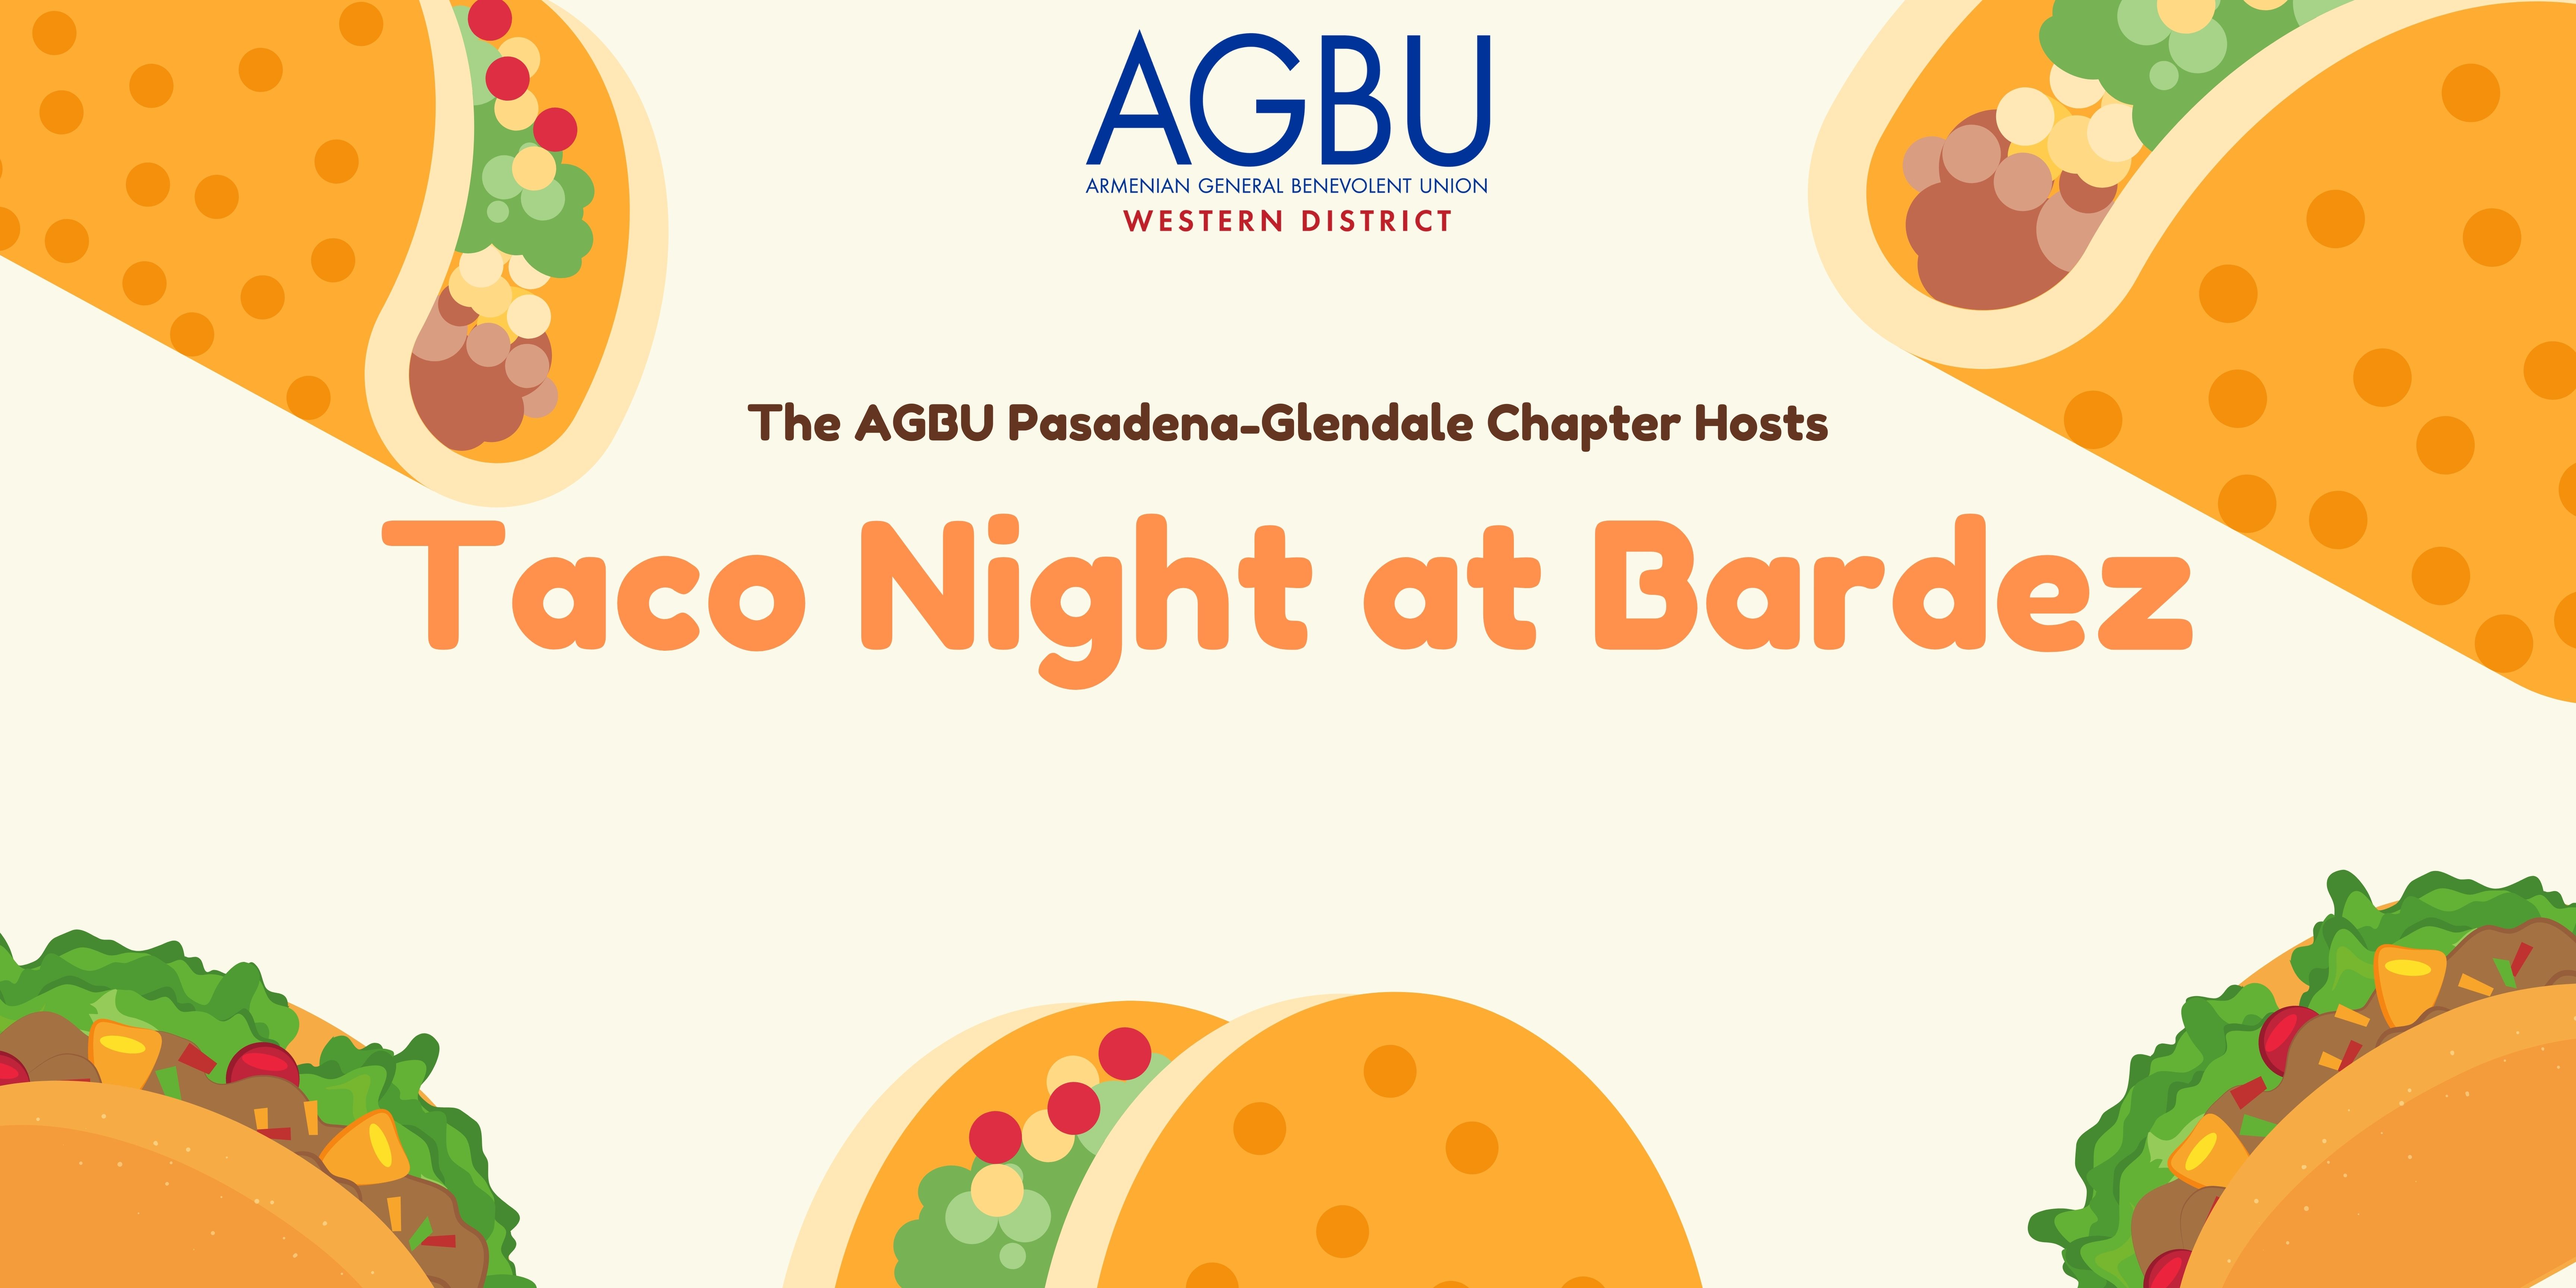 Taco Night at Bardez